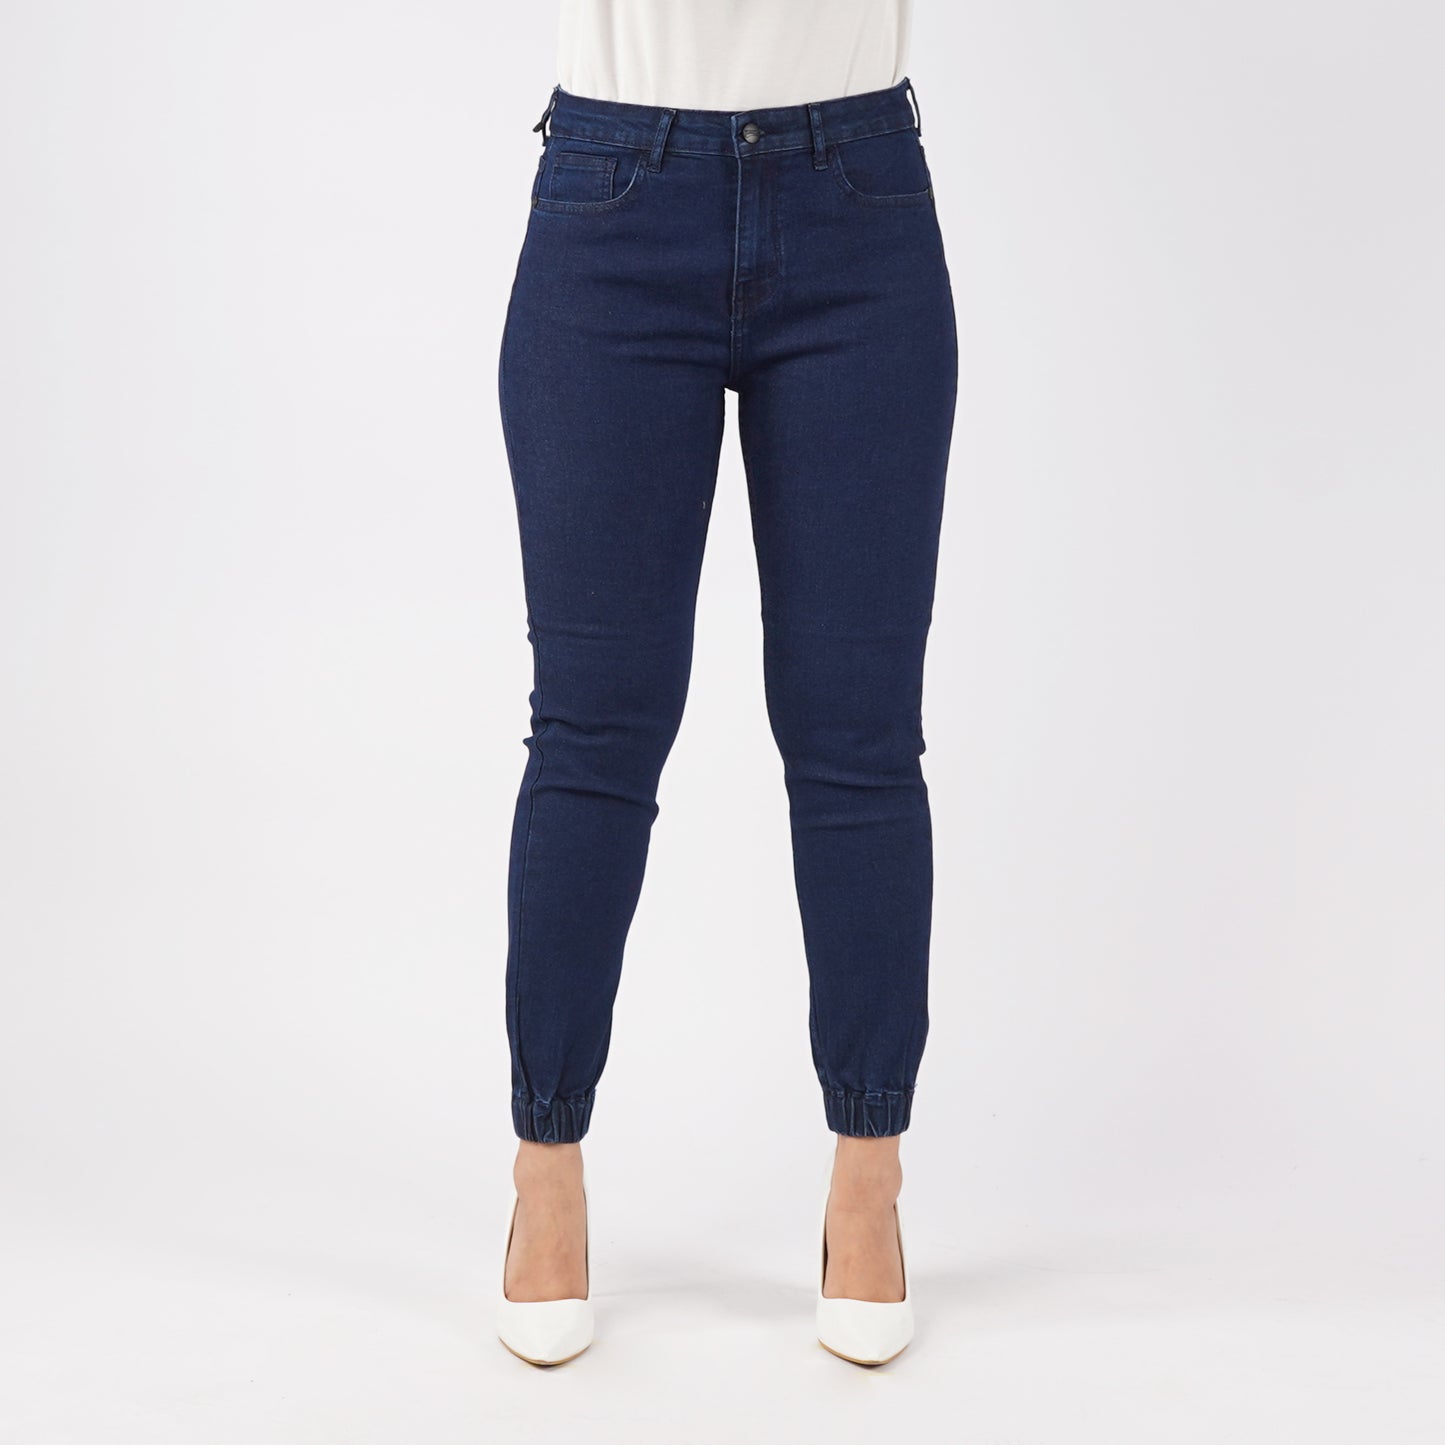 Petrol Ladies Basic Denim Boyfriend Jeans for Women Trendy Fashion High Quality Apparel Comfortable Casual Pants for Women Mid waist 149417 (Dark Shade)